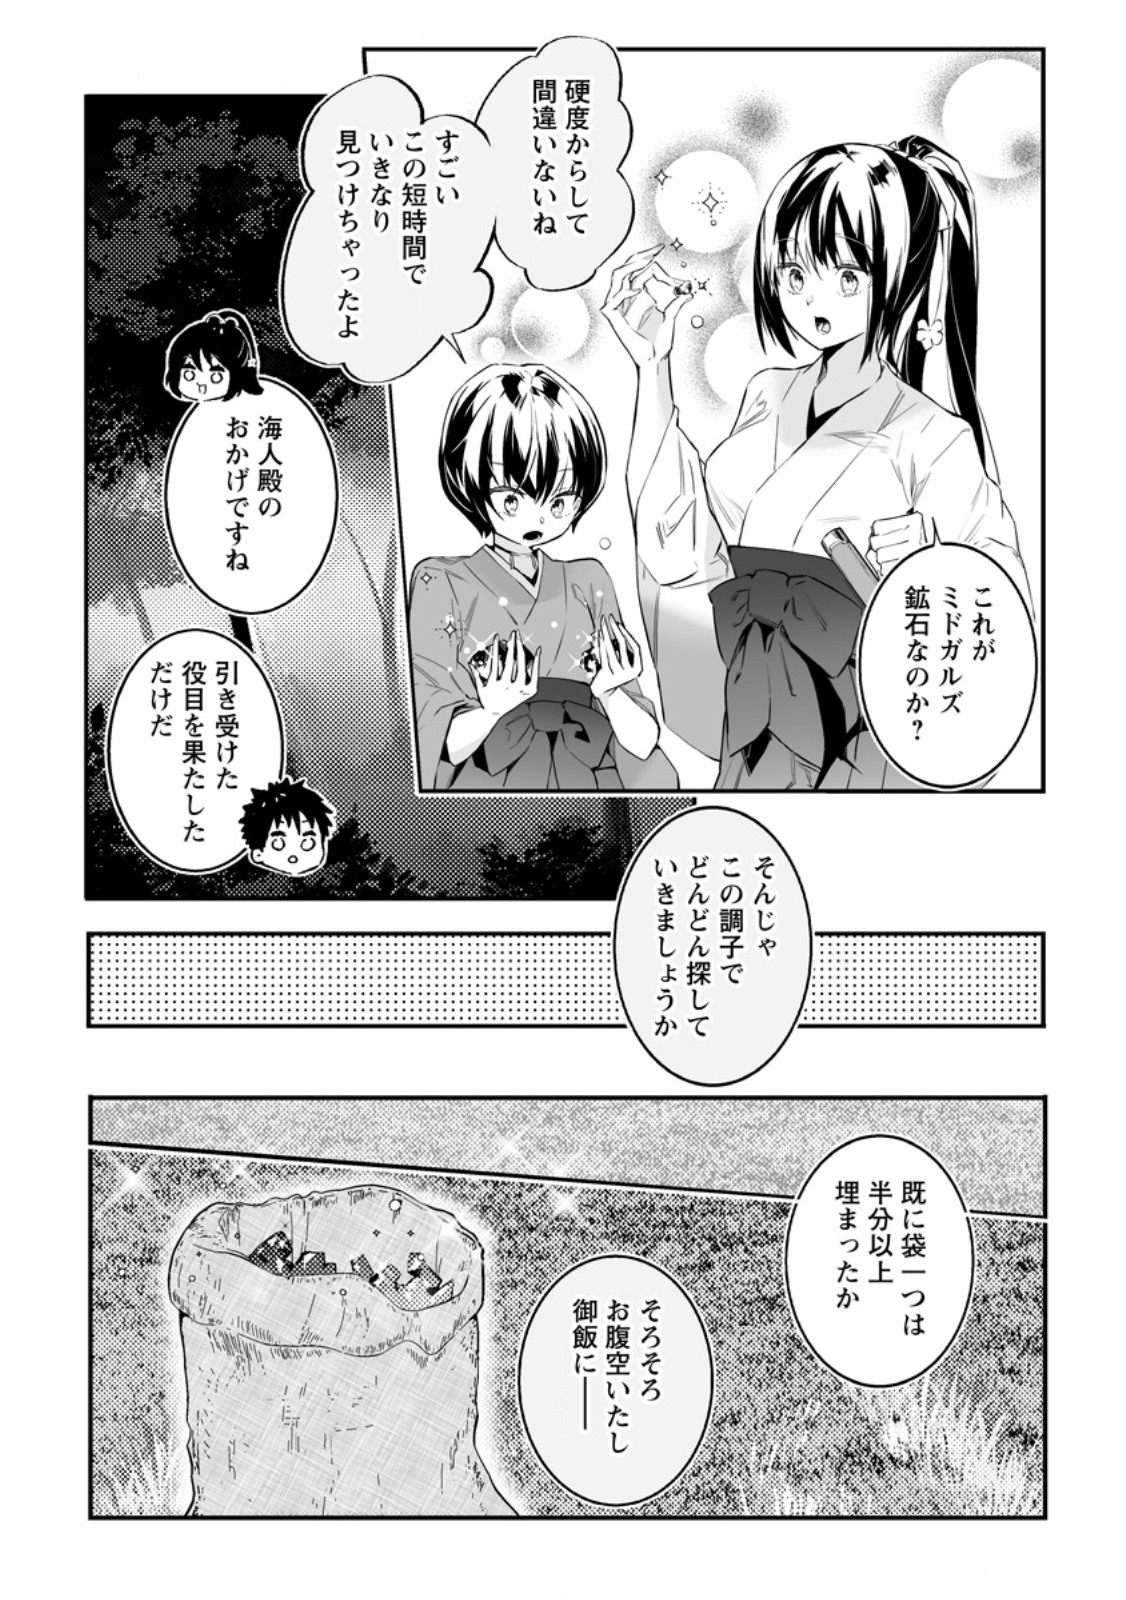 Hakui no Eiyuu - Chapter 35.3 - Page 2